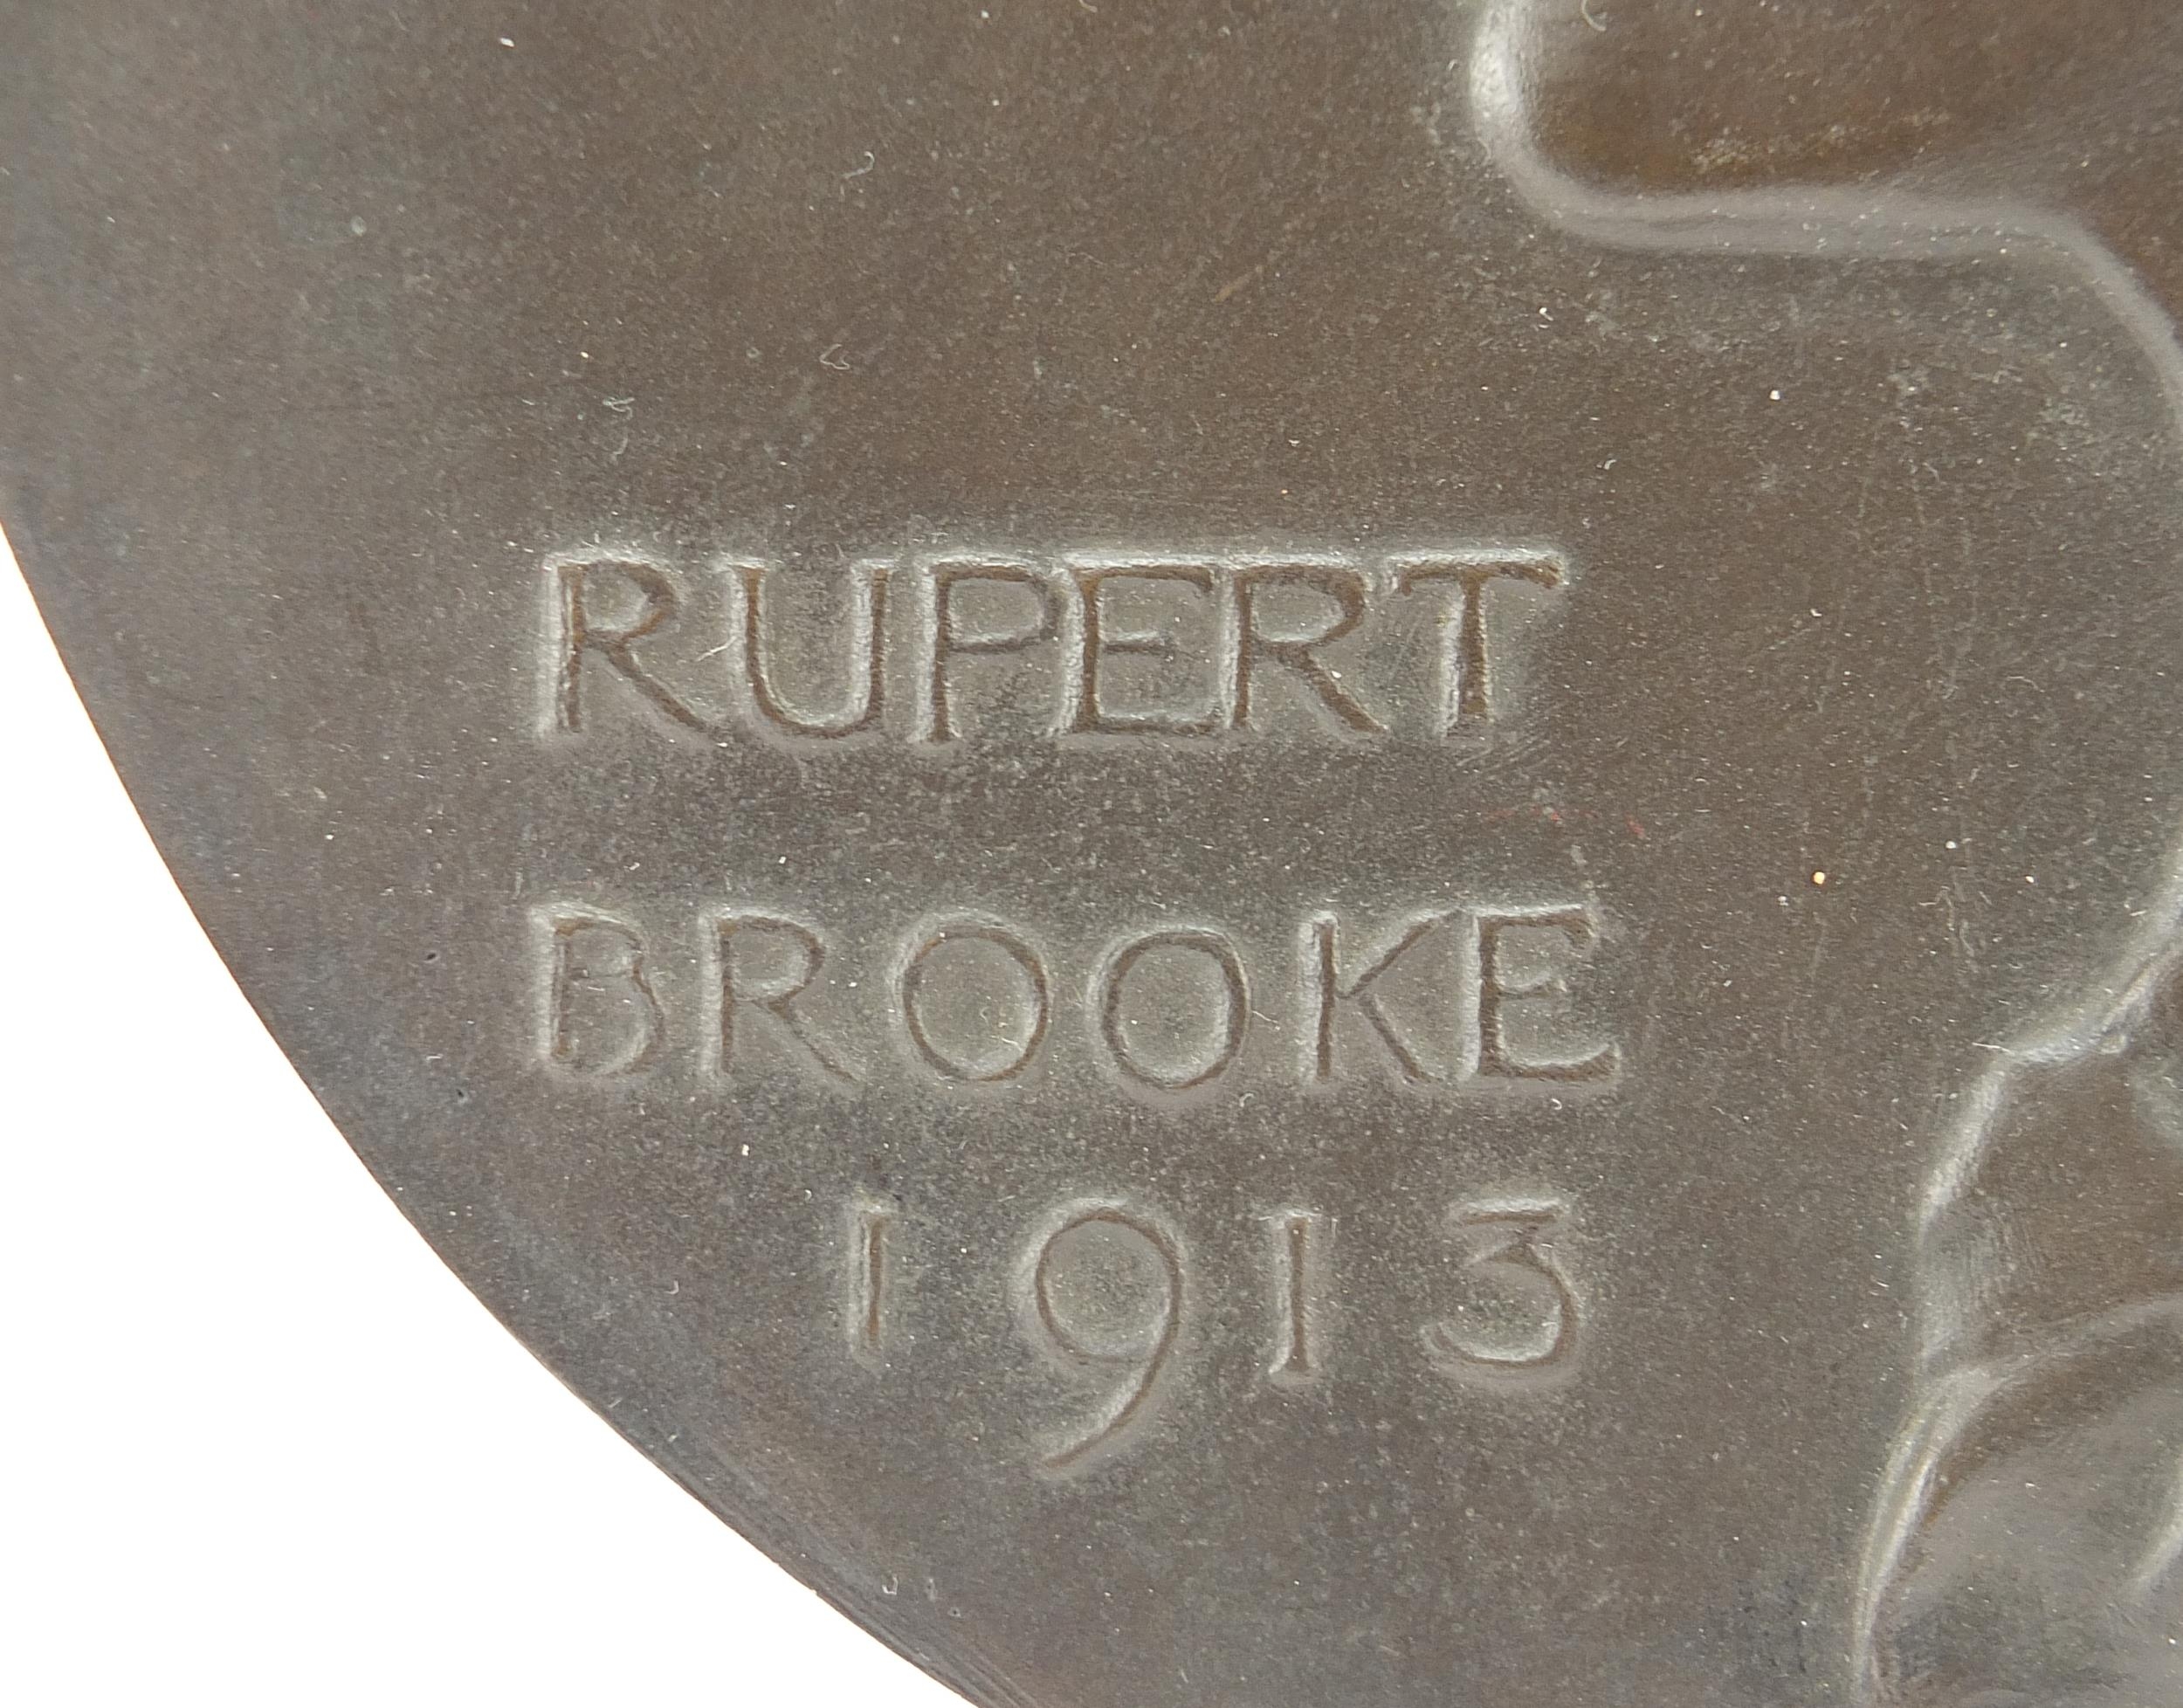 Circular bronze plaque with bust of Rupert Brooke dated 1913, 21.5cm in diameter - Image 2 of 3